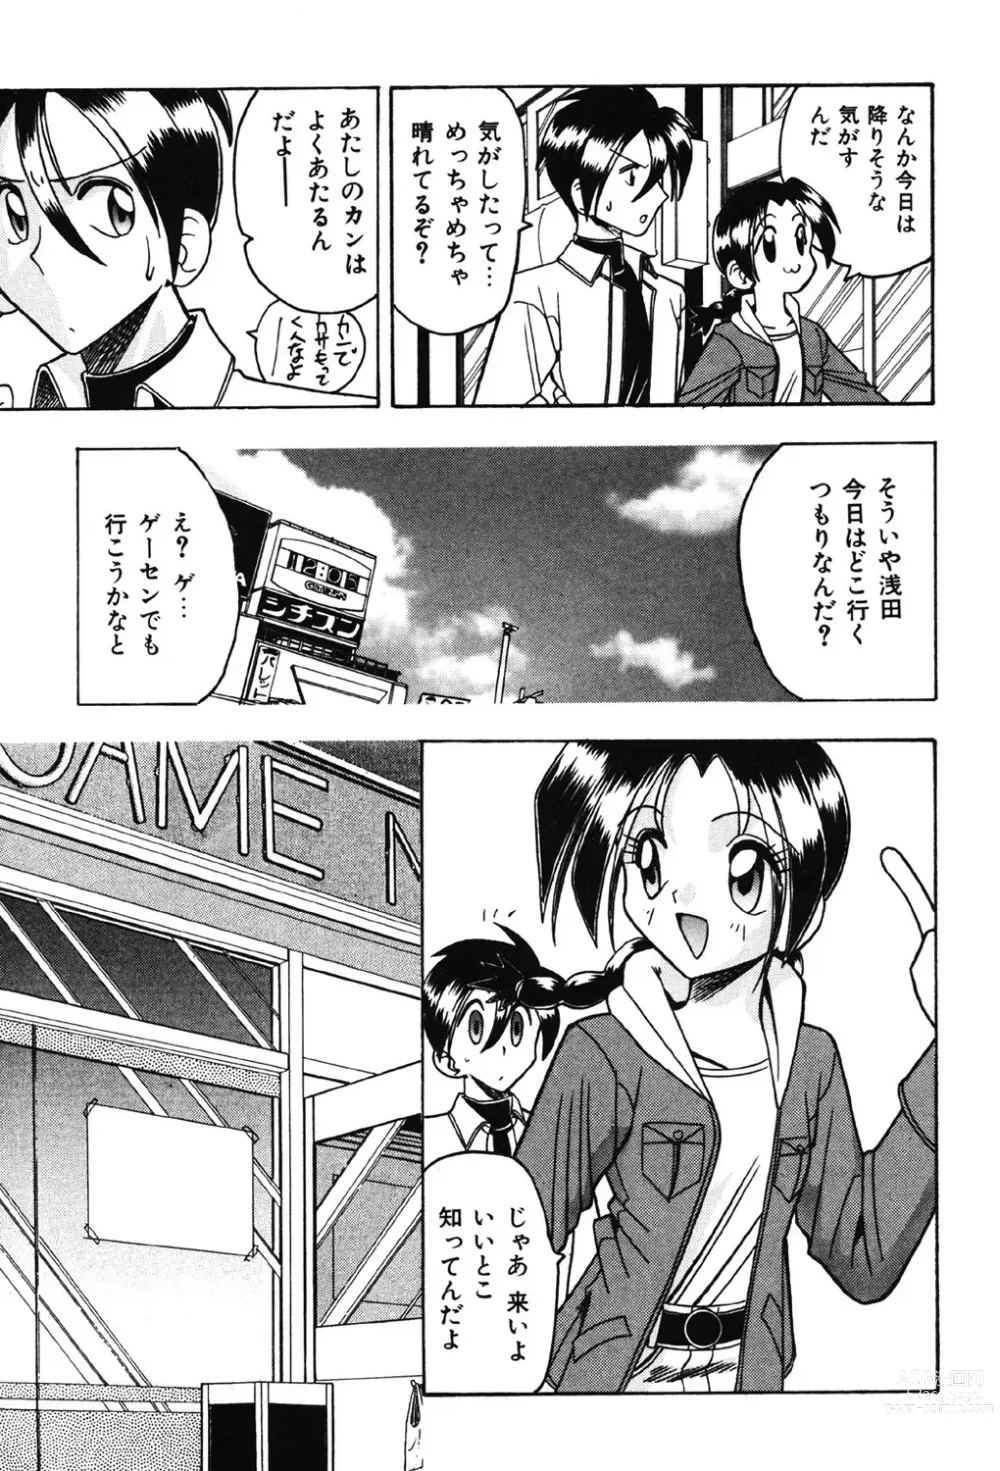 Page 130 of manga Hahaoya Ga Onna Ni Naru Toki